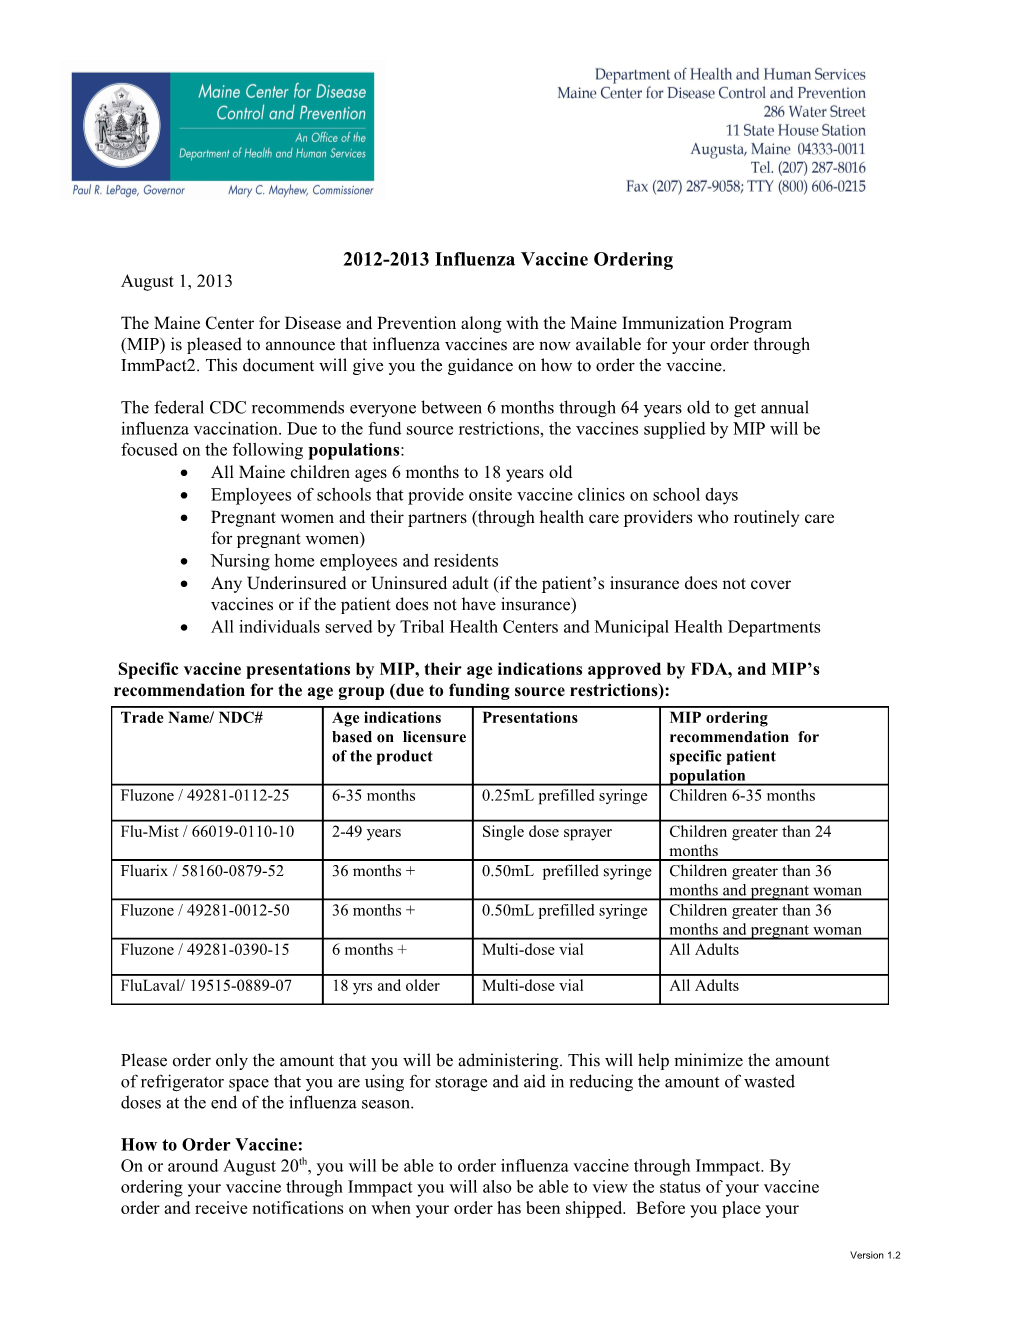 2011-2012 Influenza Availability Information